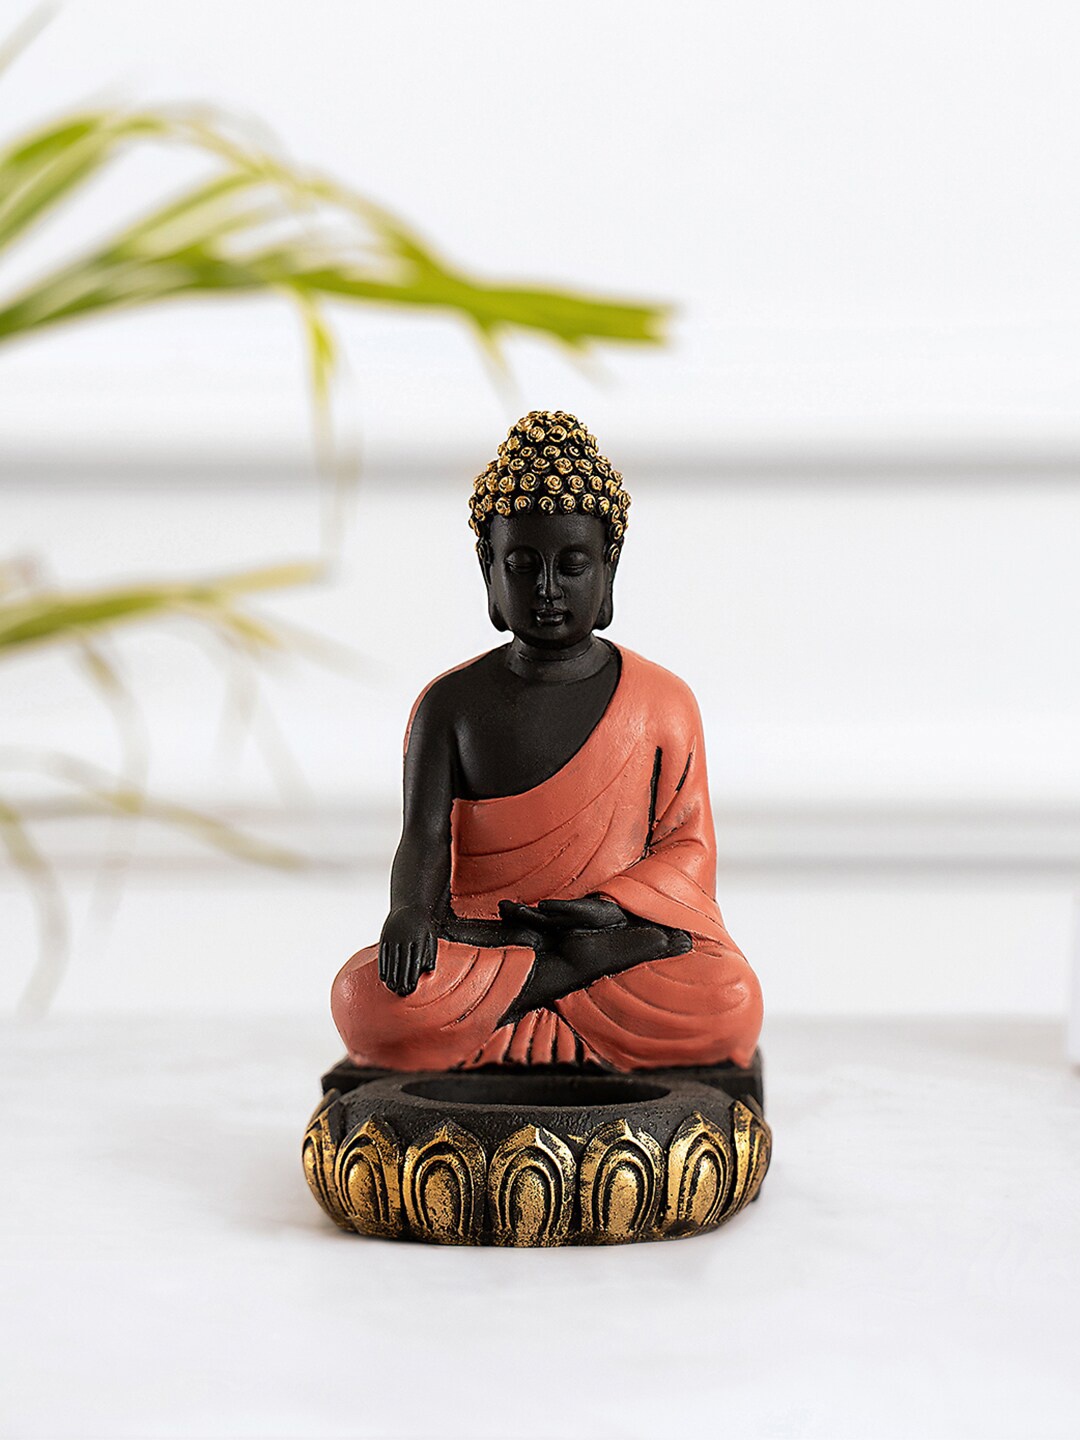 

DecorTwist Black & Peach-Colored Sitting Buddha Idol Showpiece With Tealight Candle Holder